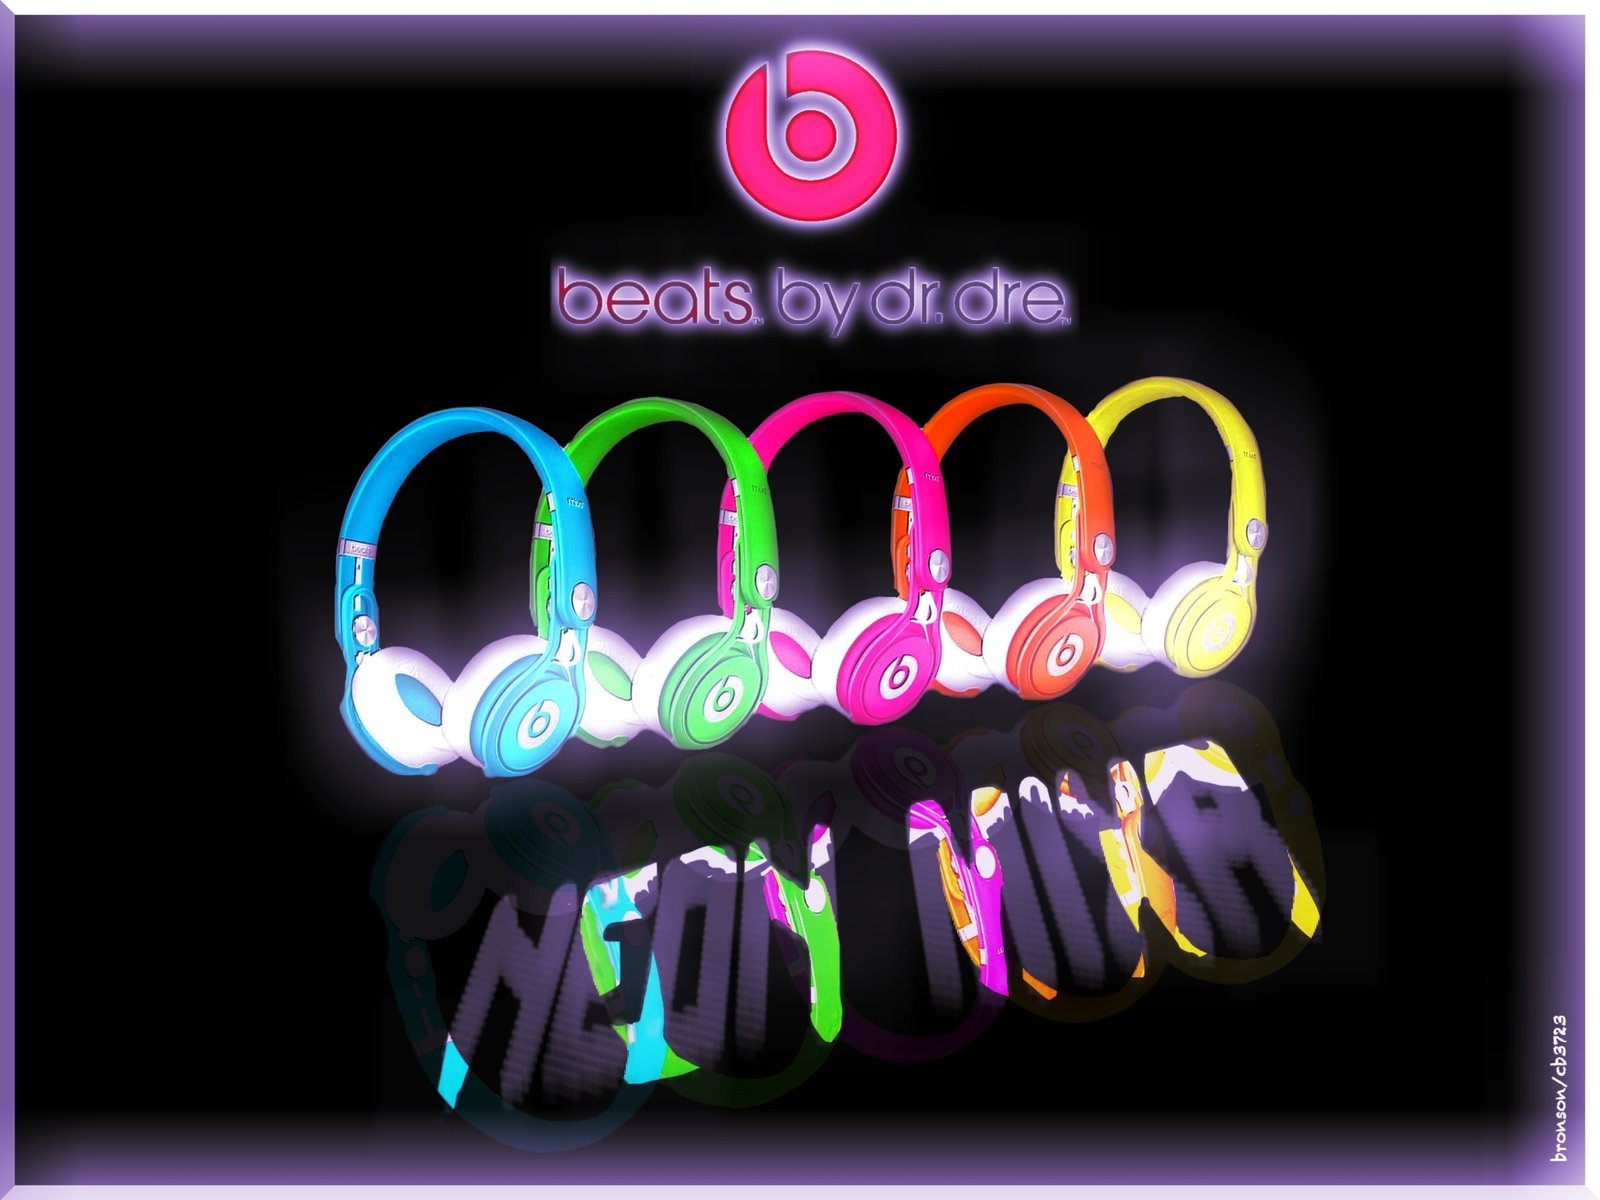 beats, Audio, Stereo, Speaker, Radio, Speakers, 1baudio, Headphones, Poster, Logo, Music, Dre, Poster Wallpaper